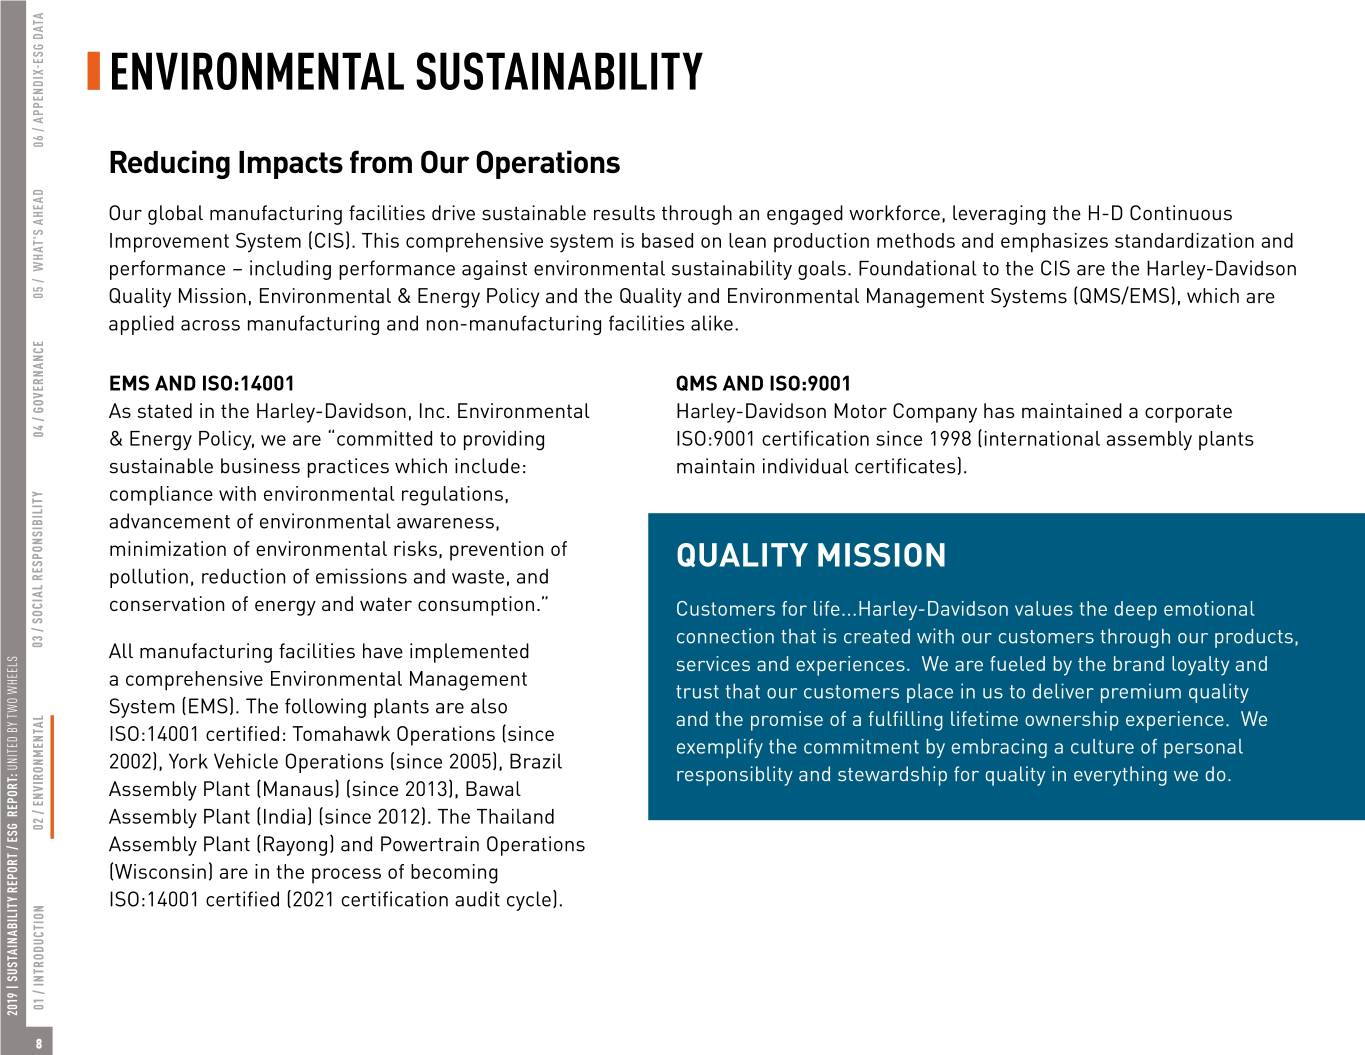 hd-sustainabilityxreport019.jpg